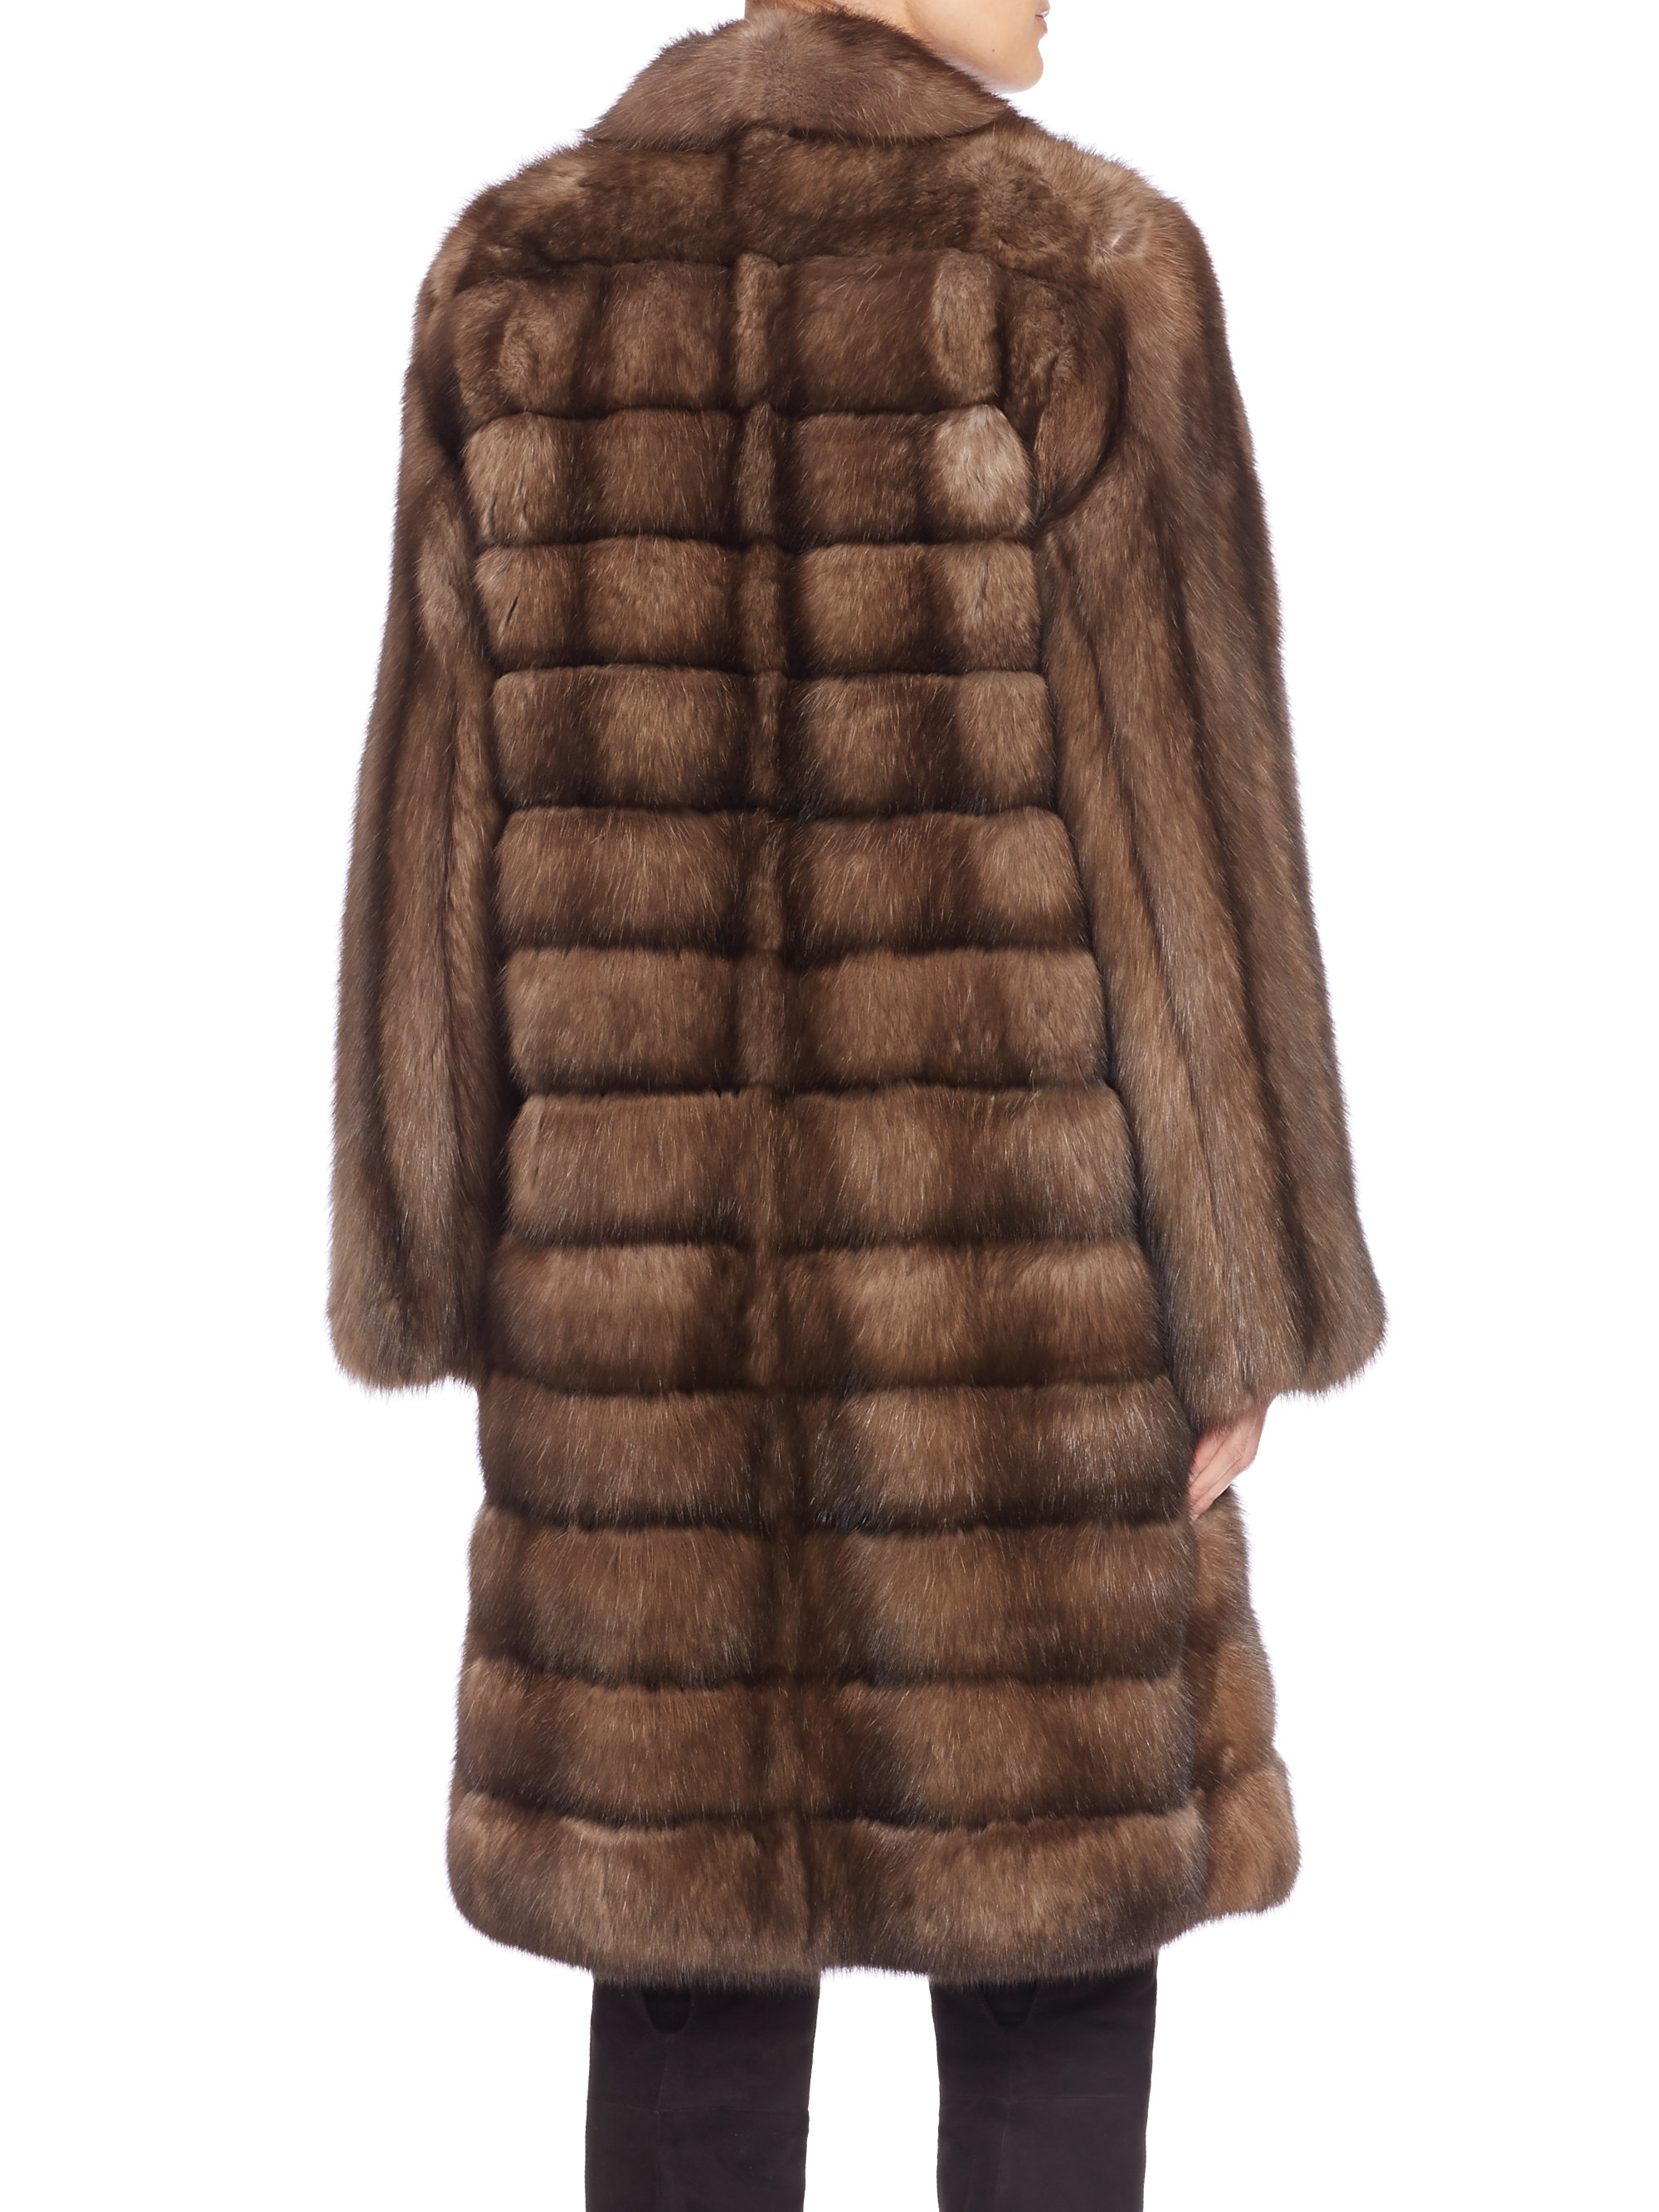 Lyst - Saks Fifth Avenue Sable Fur Coat in Brown